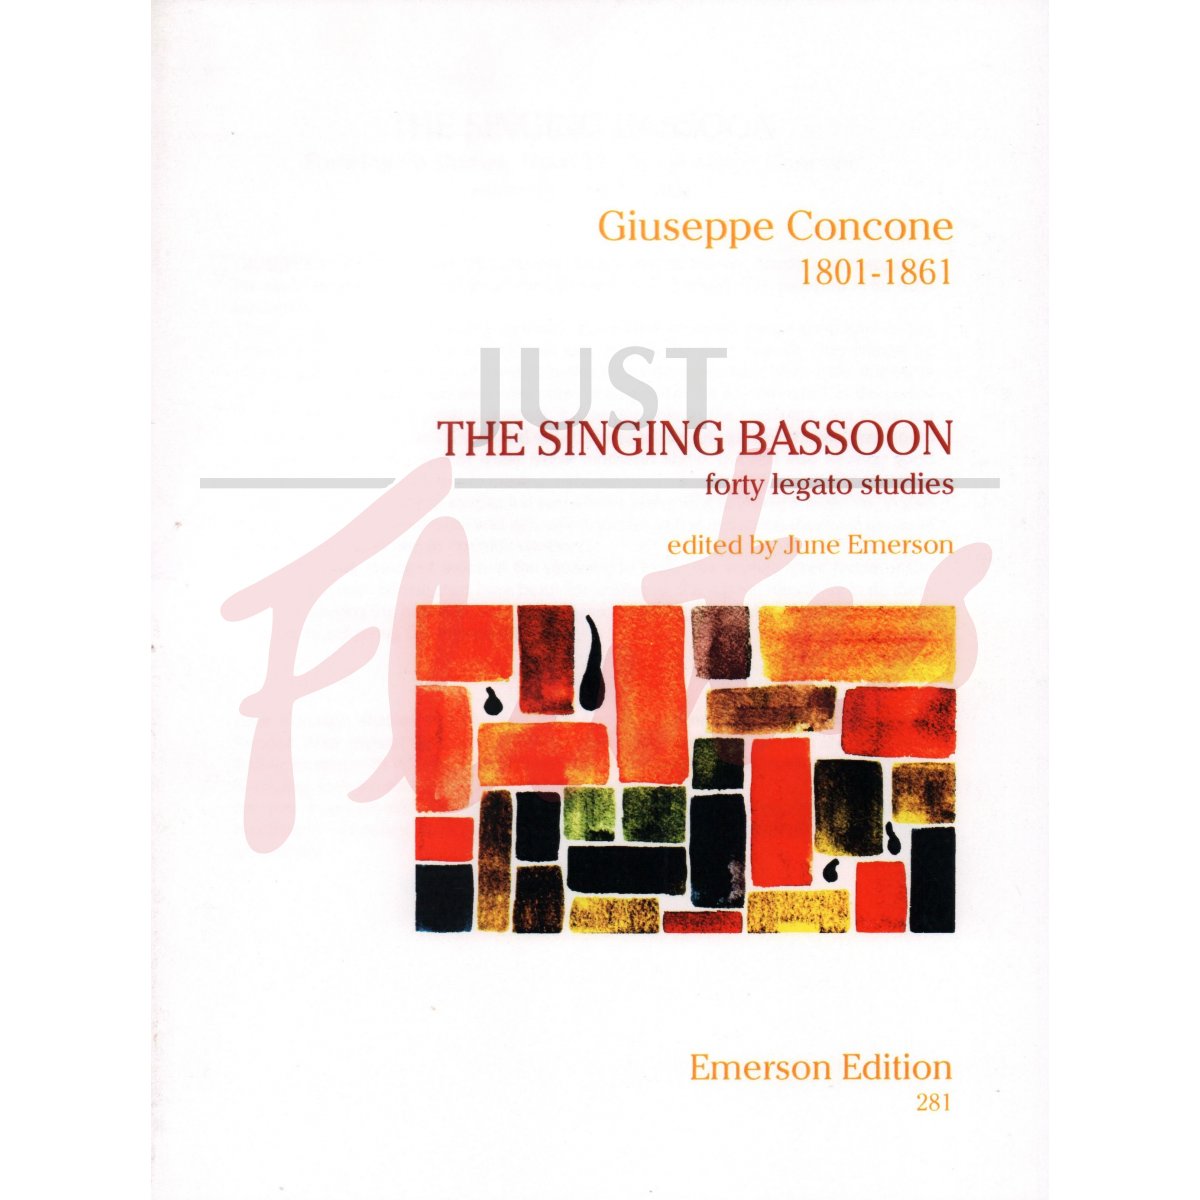 The Singing Bassoon - 40 Legato Studies